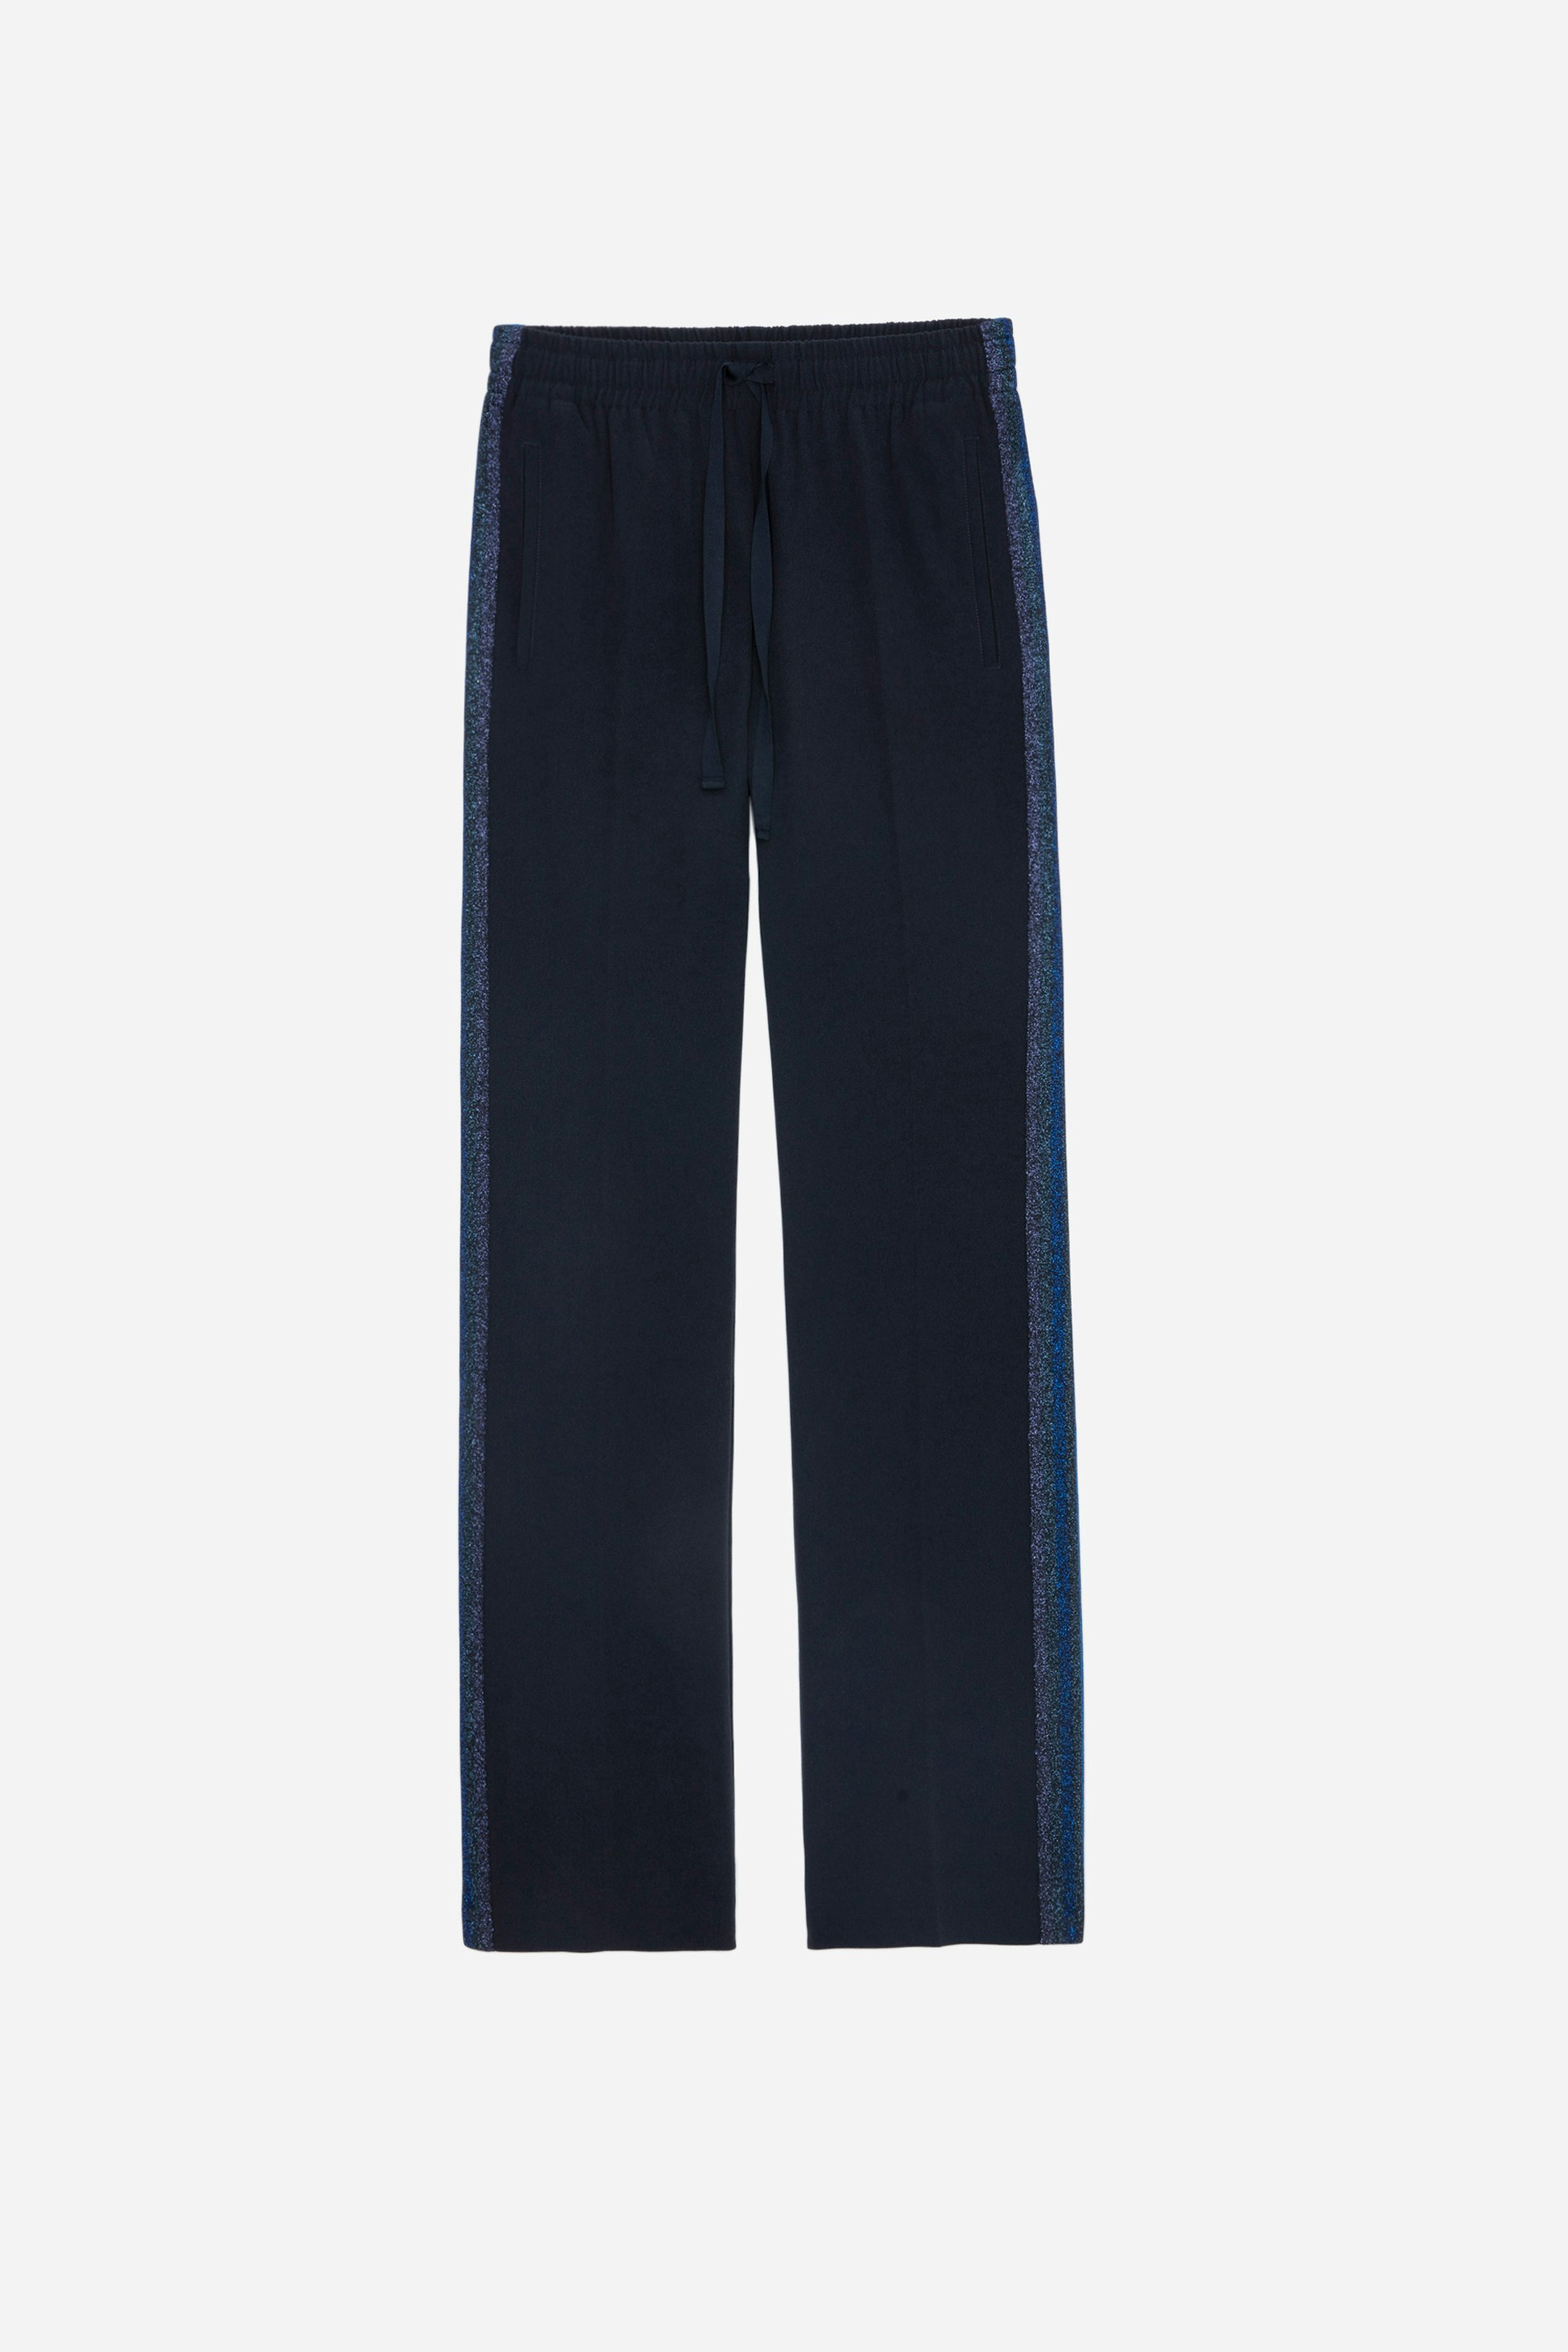 Pantalon Pomy Pantalon en crêpe bleue marine à bandes latérales pailletées.